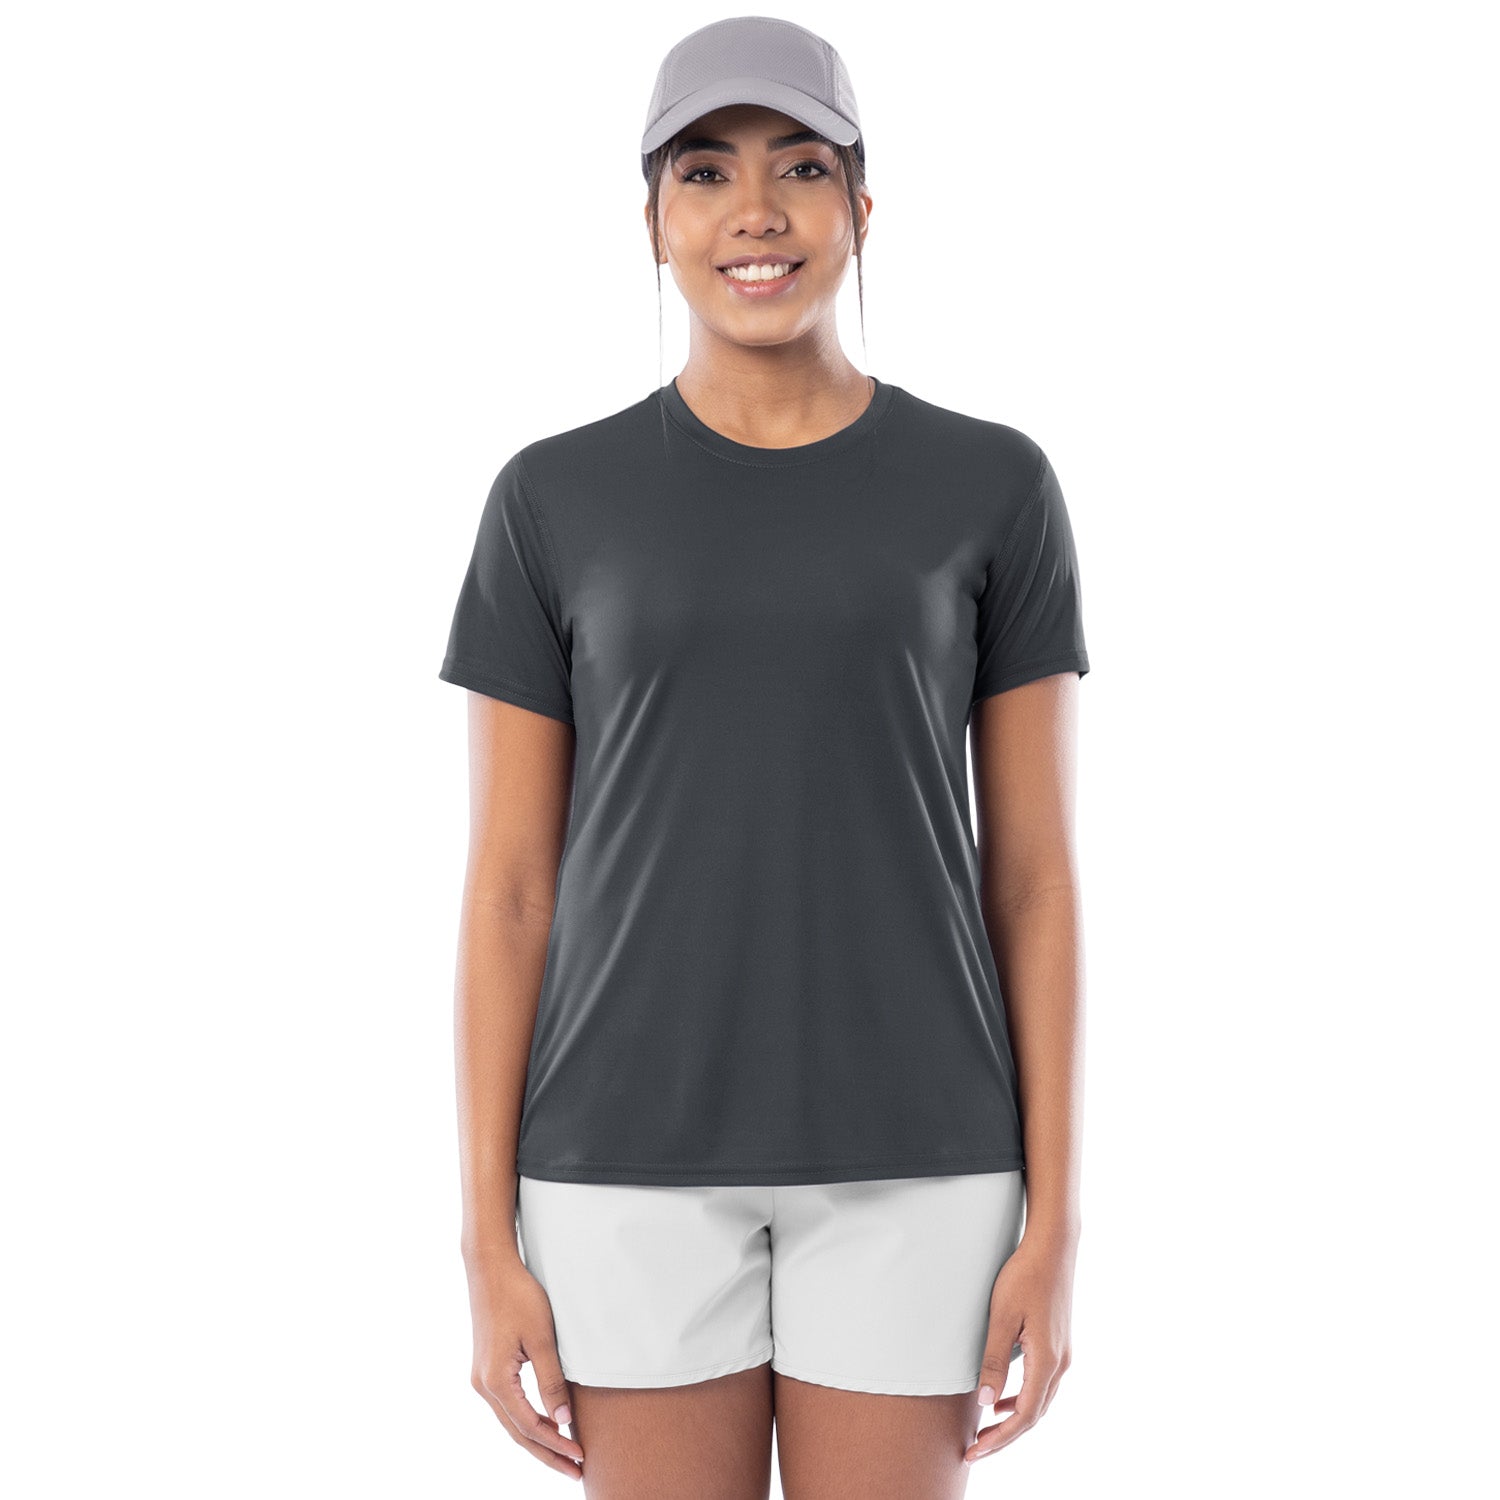 Women's Dark Grey Training T-Shirt Front View